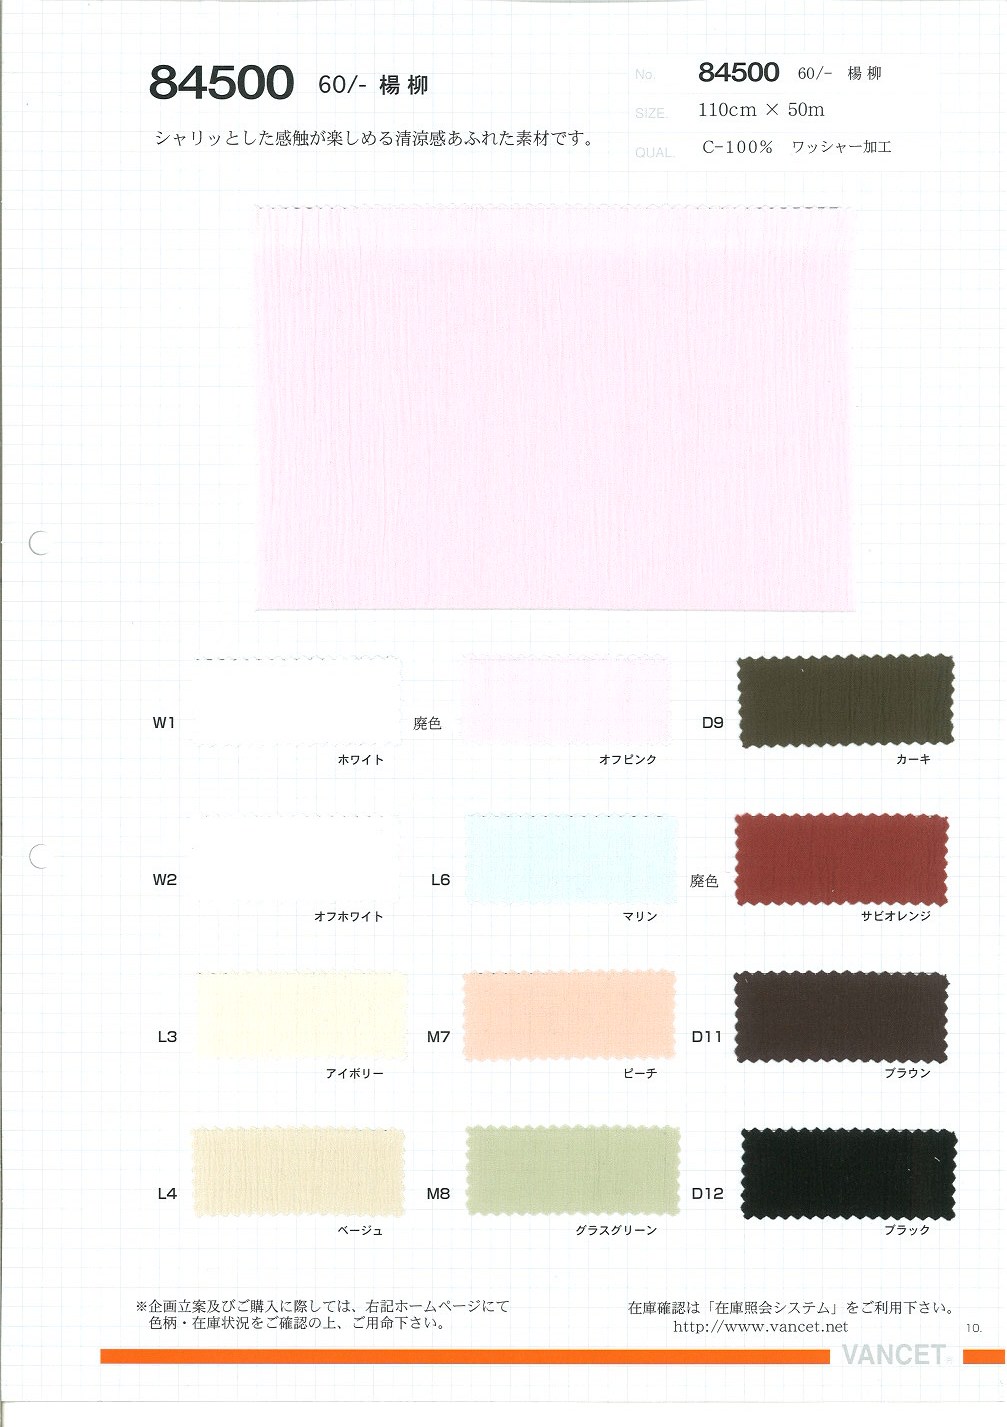 84500 60 Single Thread Yoryu (Wrinkle Crepe)[Textile / Fabric] VANCET